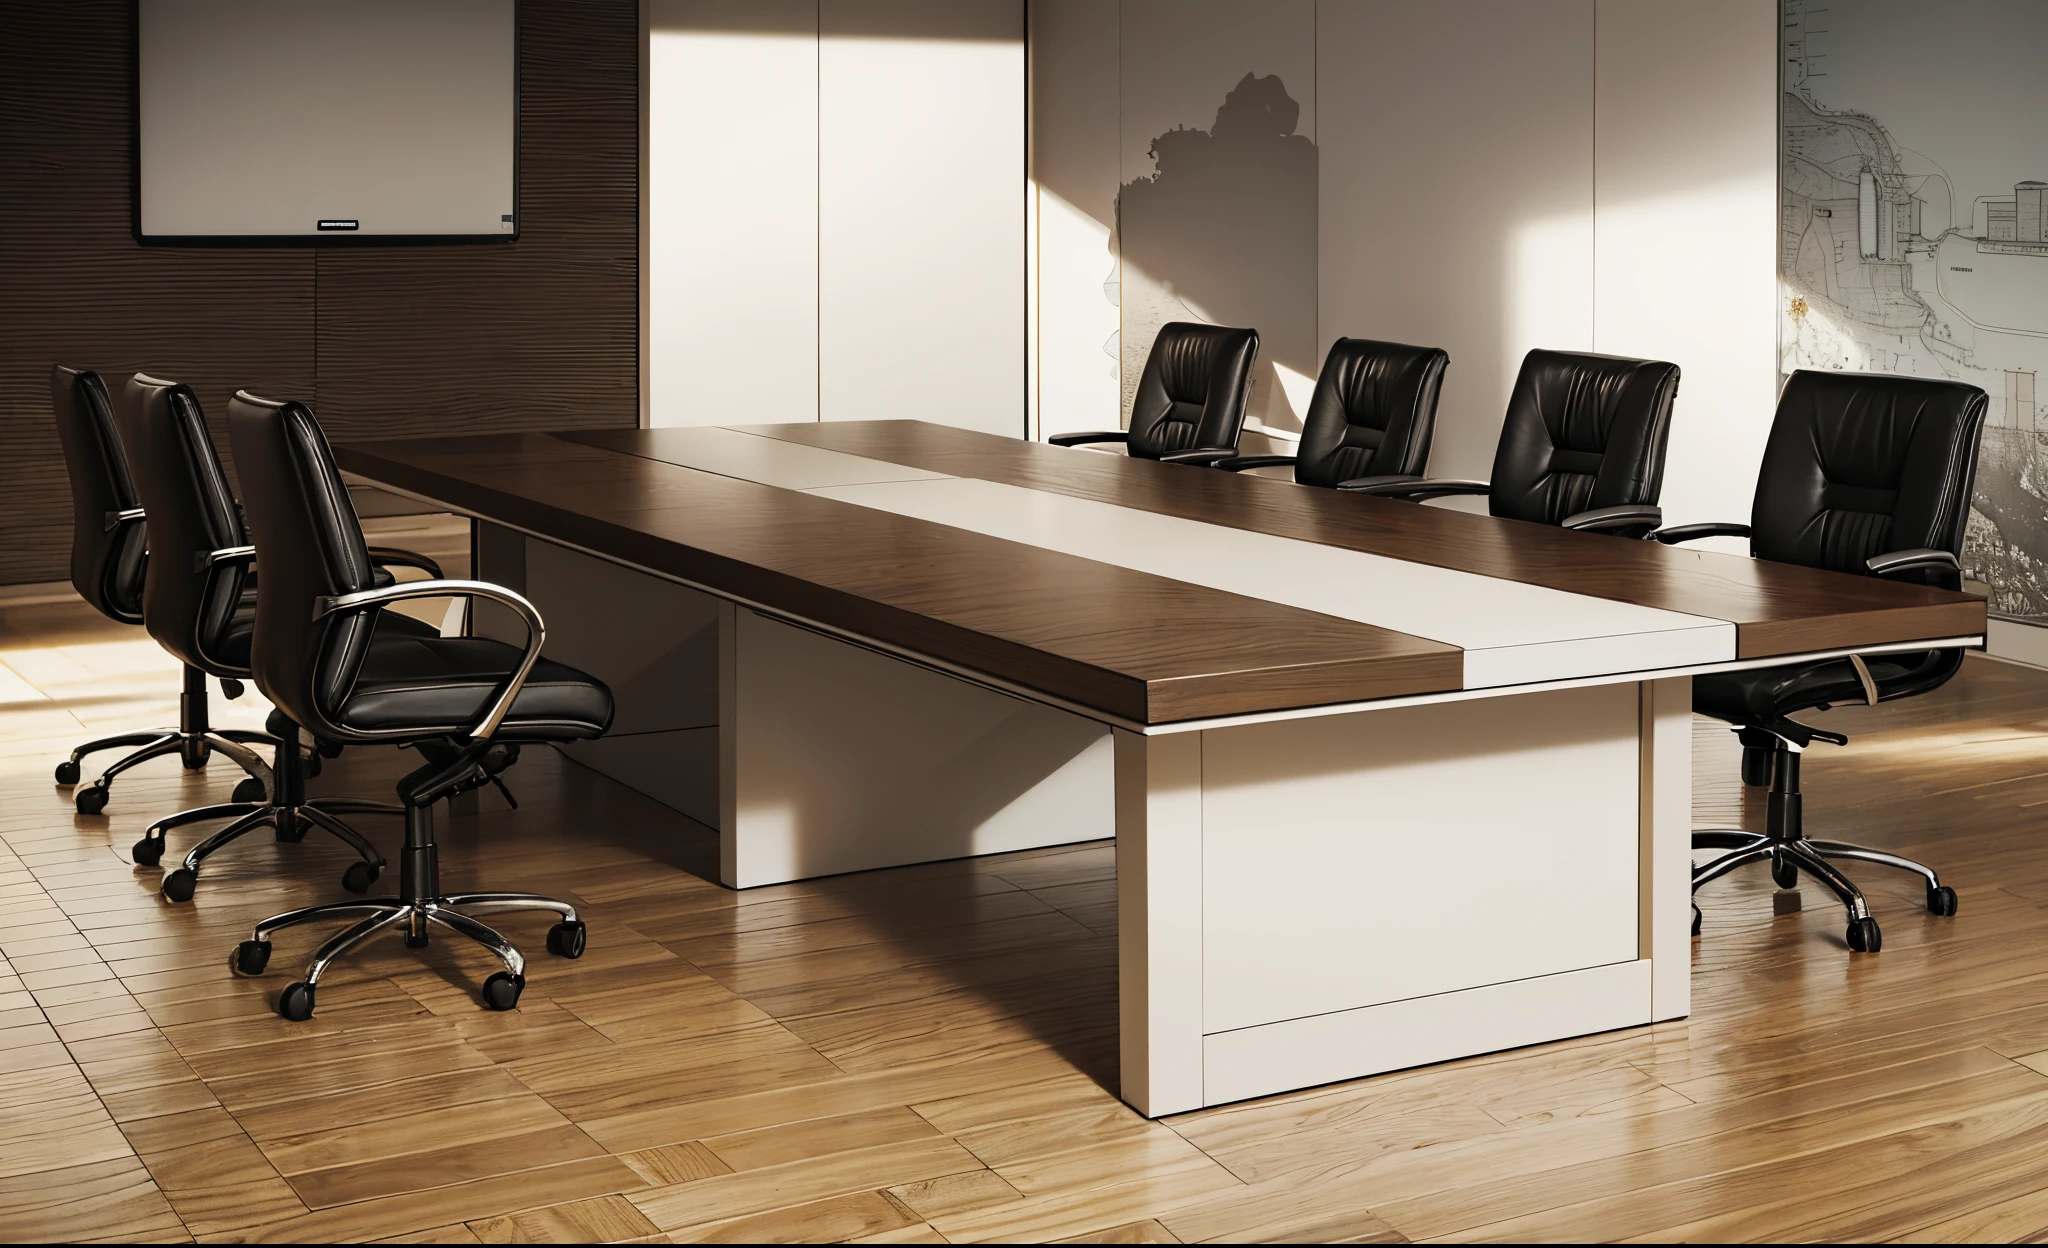 there is a large conference โต๊ะ with chairs and a flat screen tv, เฟอร์นิเจอร์สํานักงาน, in a ห้องประชุม, โต๊ะs, cubical ห้องประชุม office, ห้องประชุม, โต๊ะทำงาน, center focus on โต๊ะ, พร้อมสำหรับการประชุม, โต๊ะขนาดใหญ่, โต๊ะ, สมจริงเกินจริง, สำนักงานสมัยใหม่, ด้วยเส้นสายที่โฉบเฉี่ยวและทรงพลัง, โต๊ะ is centered, สร้างแรงบันดาลใจ, บนโต๊ะ, สำนักงาน